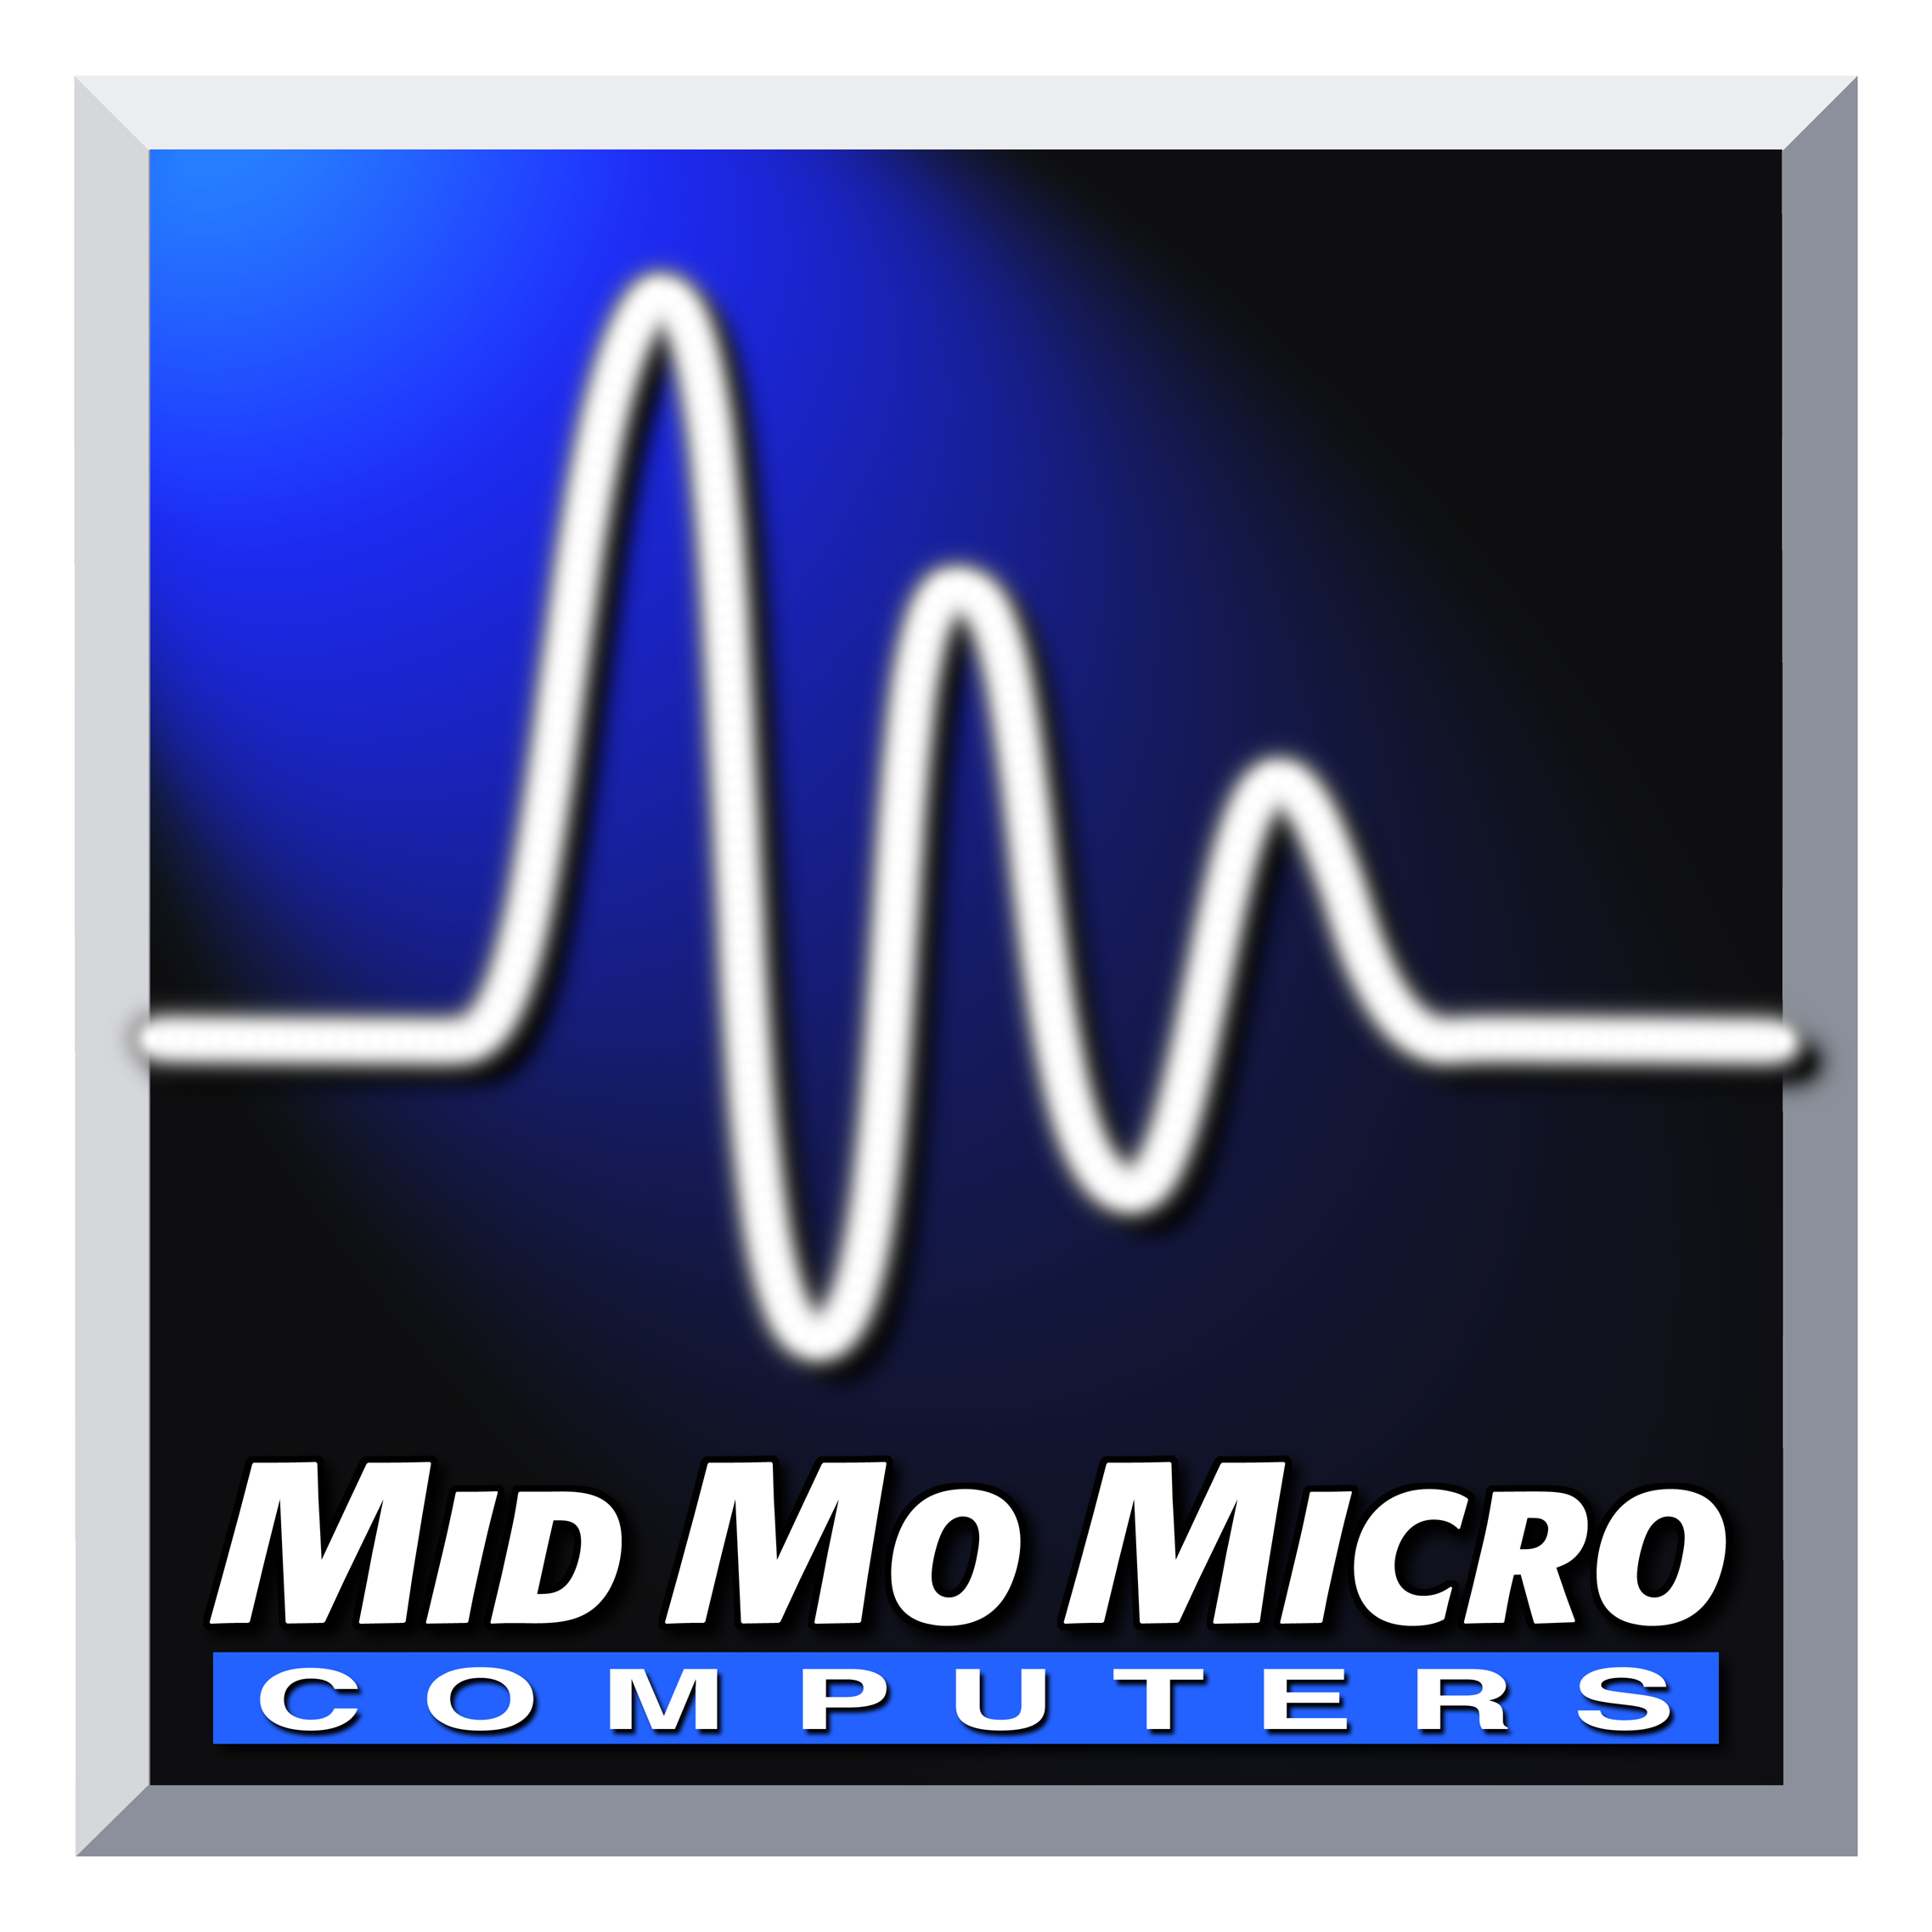 Mid MO Micro Computers